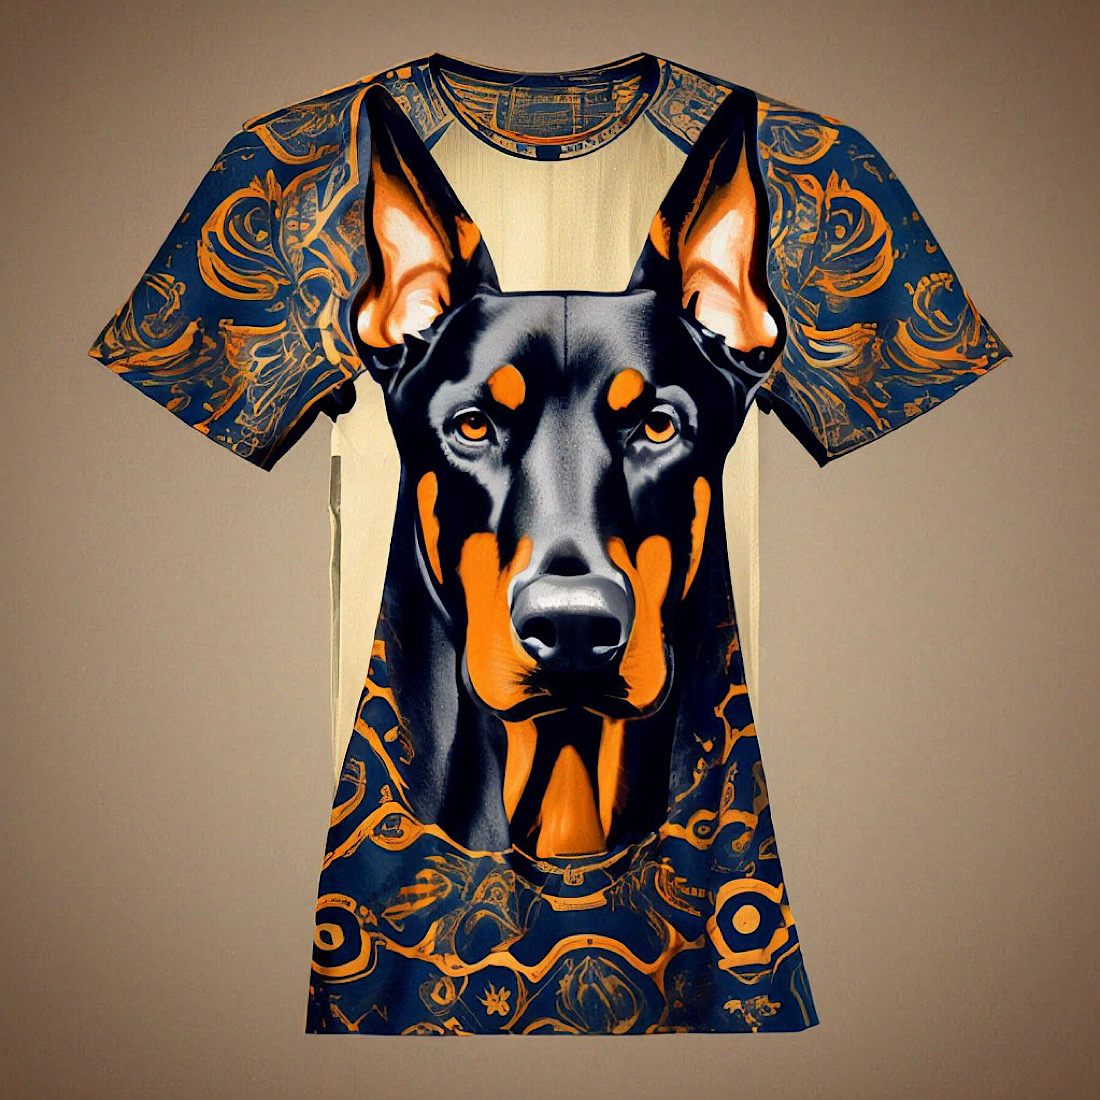 Men's Unisex T-shirt, abstract pattern, Black and orange design, Doberman pattern cover image.